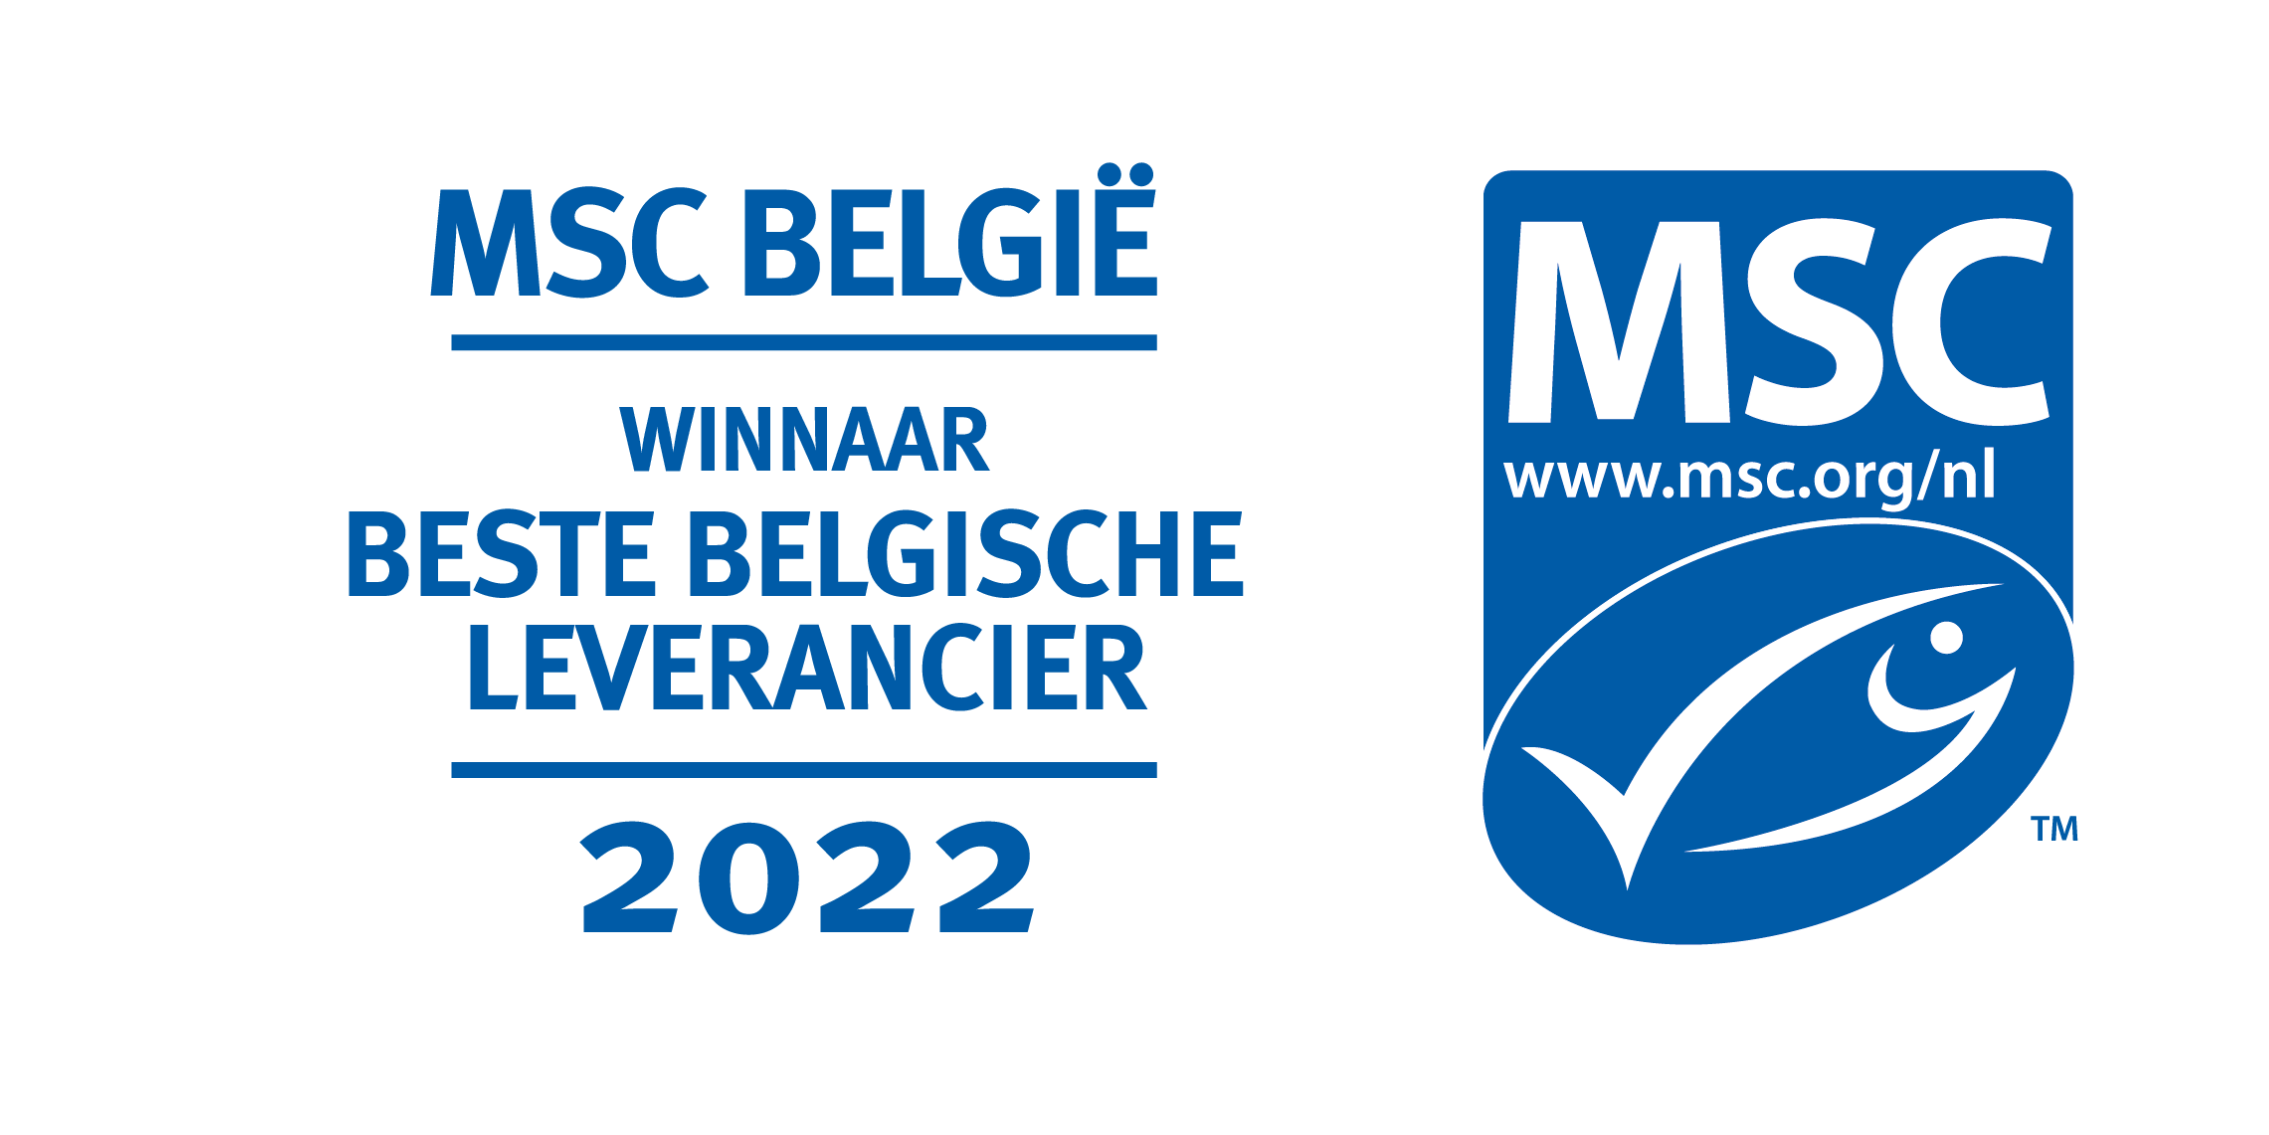 MSC België 2022